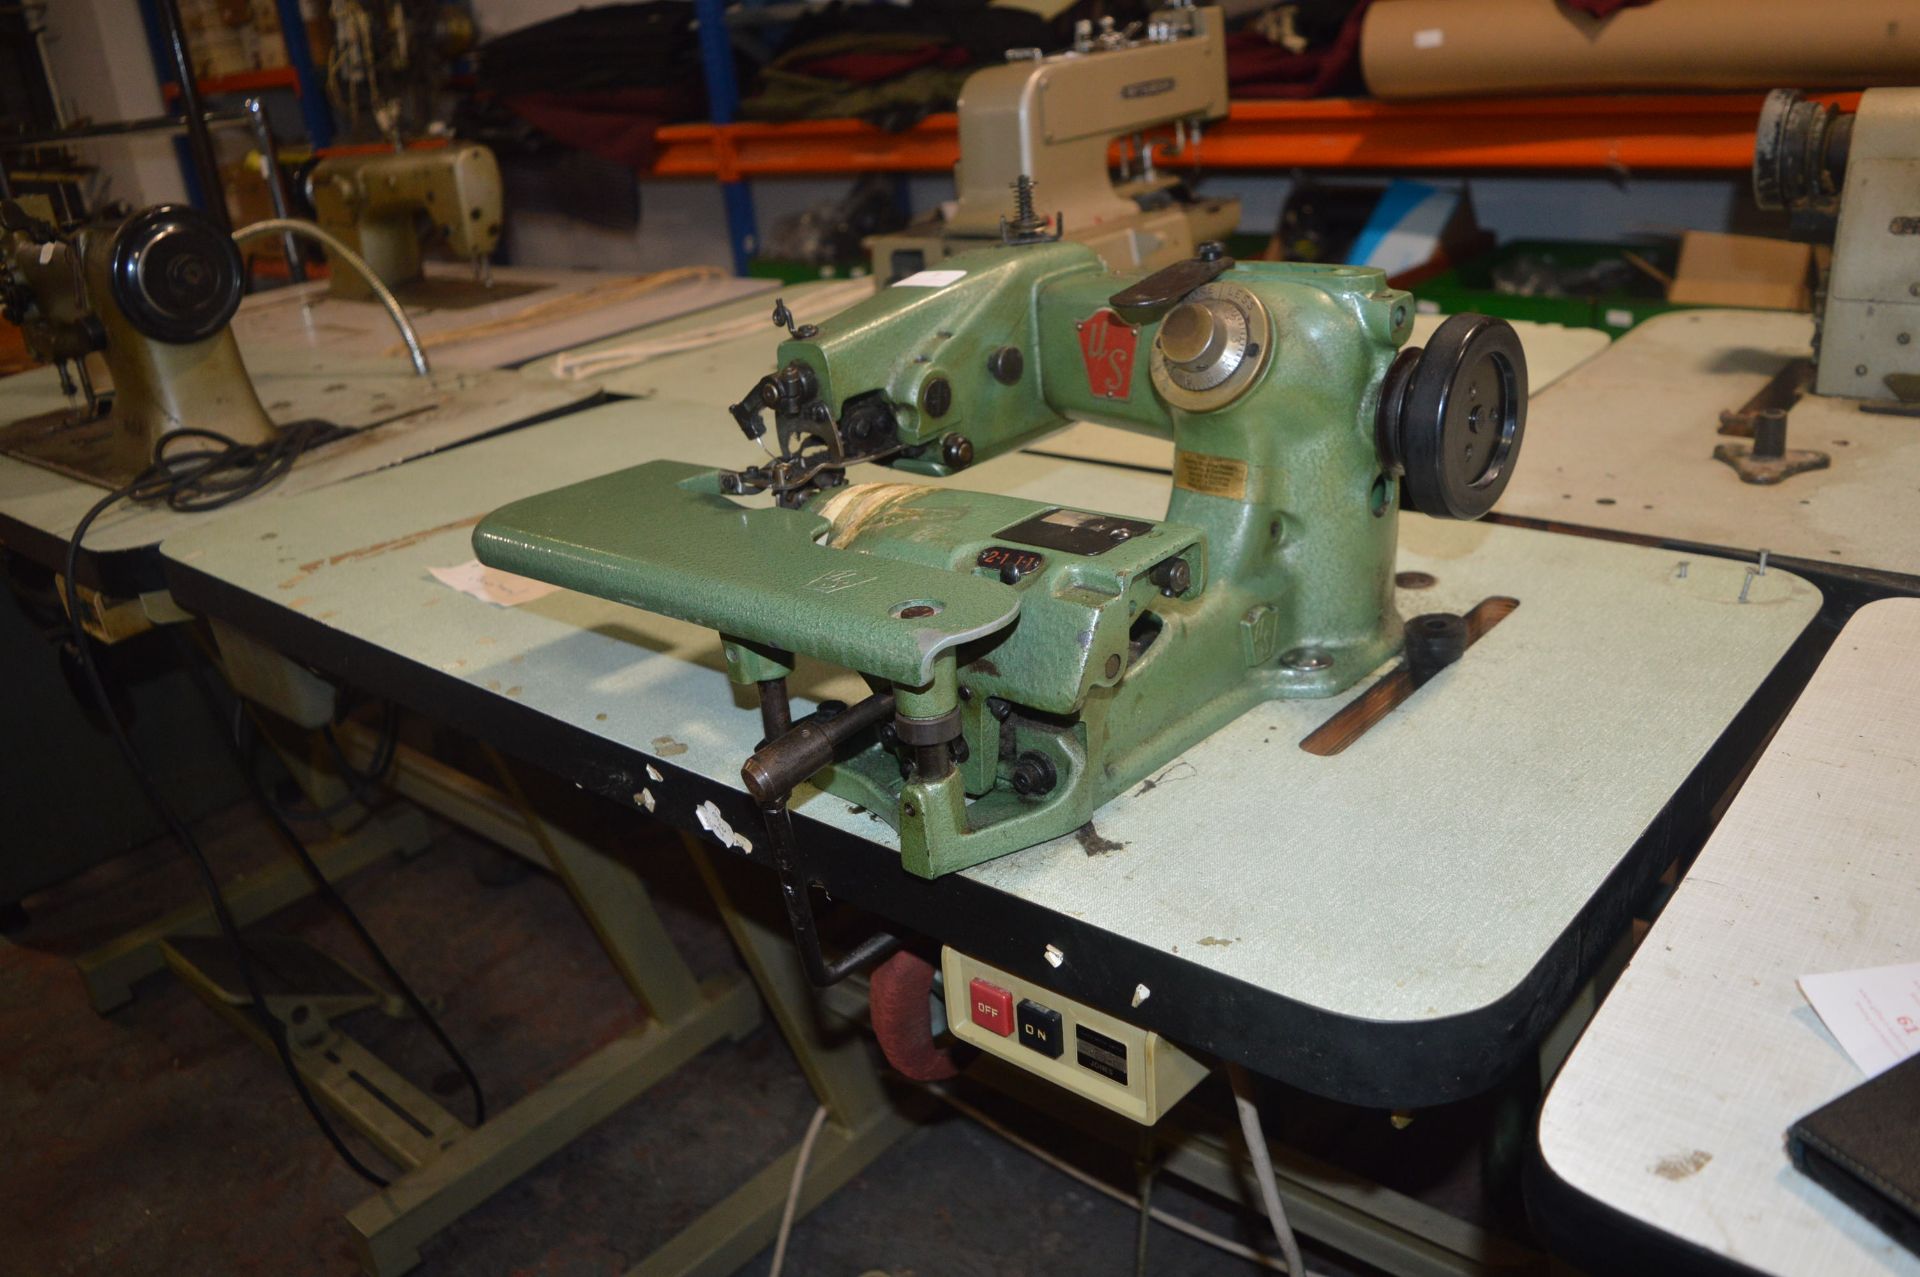 Bottom Fella Bind Hem Stich Machine Co. Sewing Machine on Table - Image 3 of 3